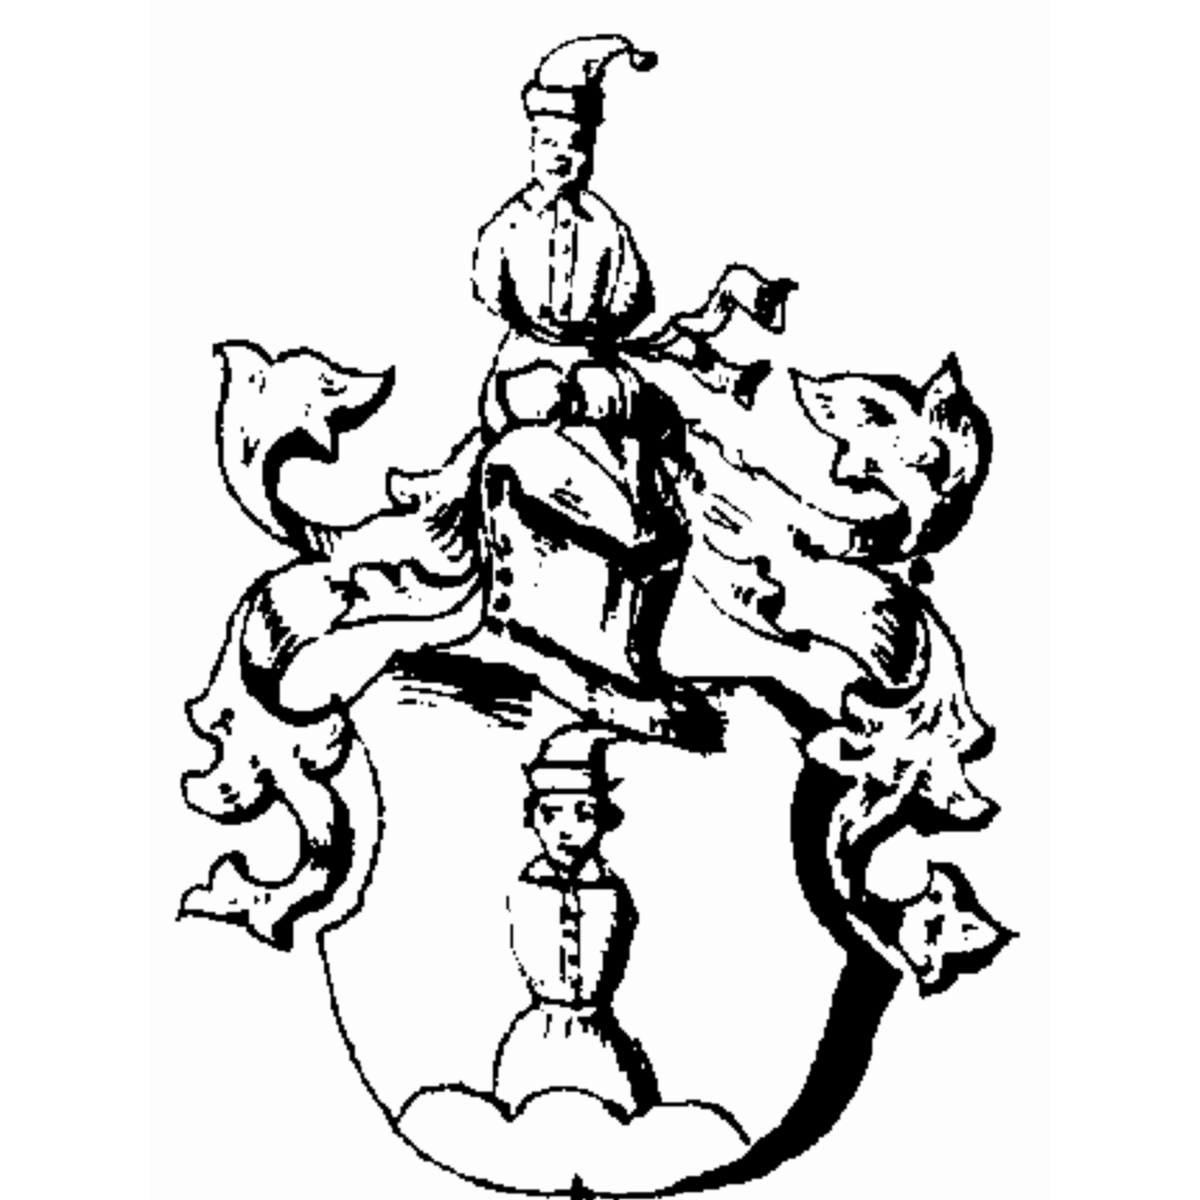 Wappen der Familie Gotfroid